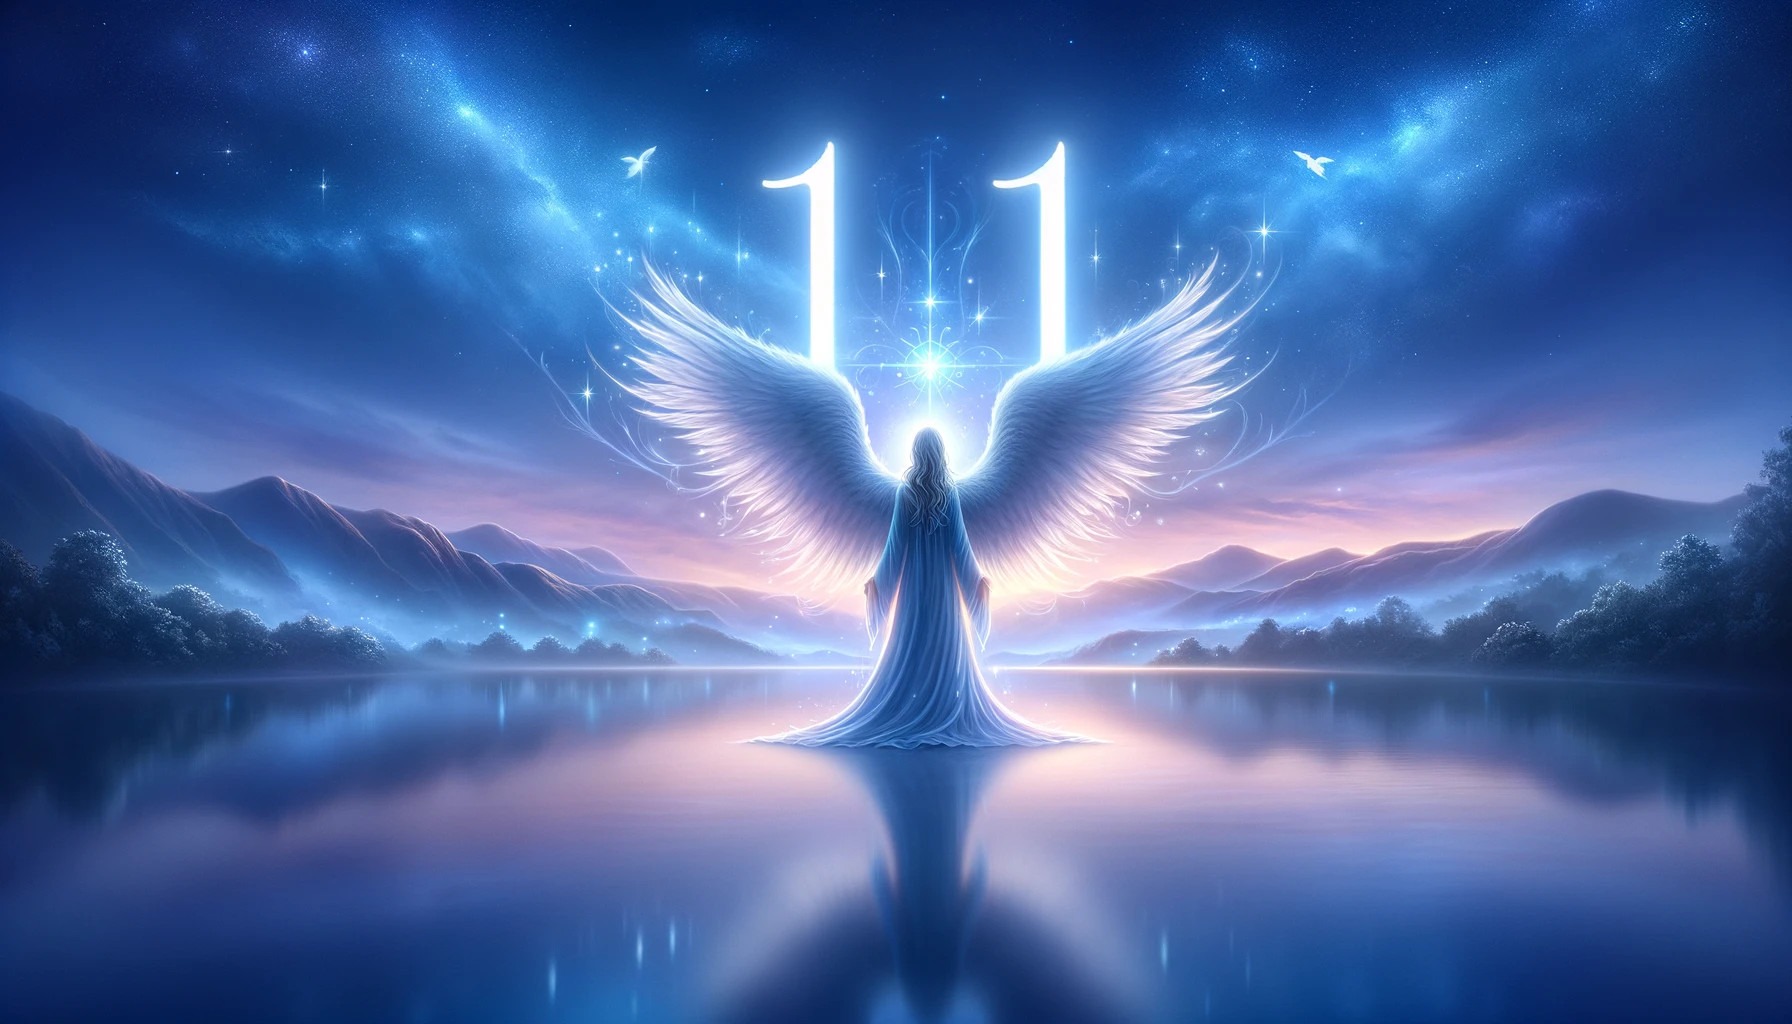 engelengetal 11 spiritueel